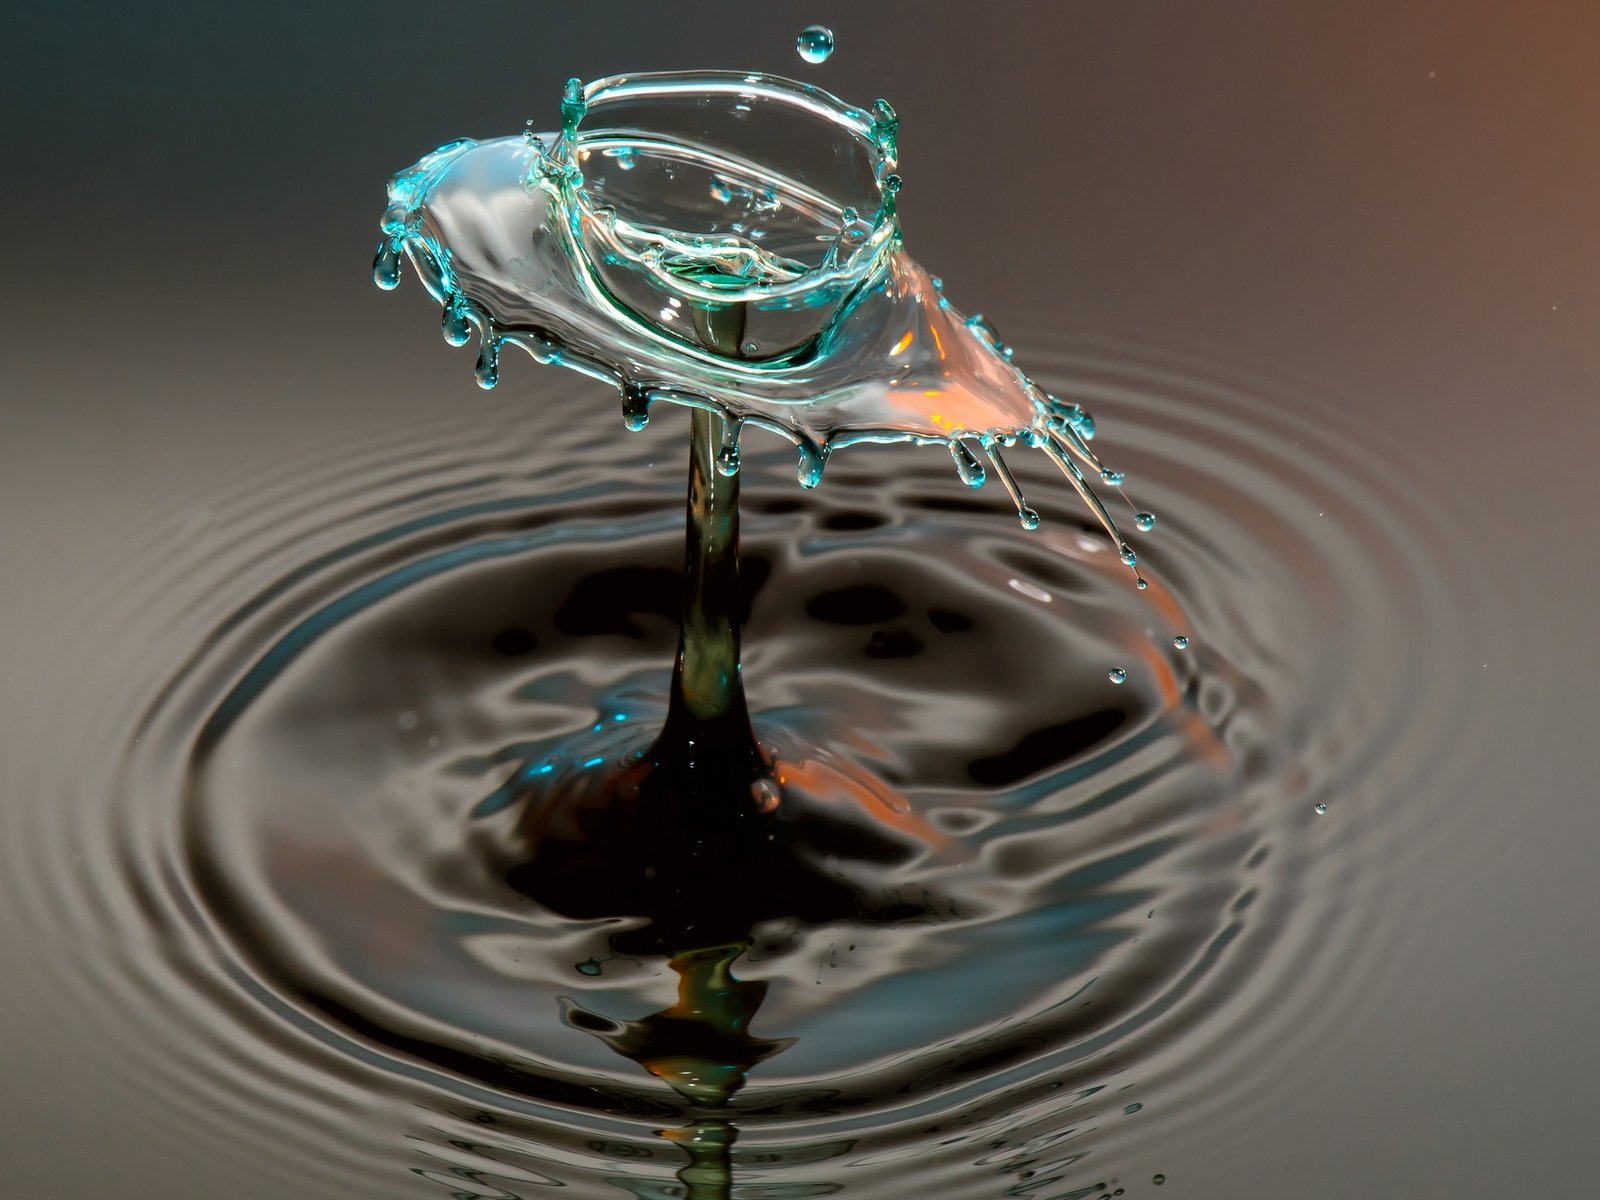 Water Splash for 1600 x 1200 resolution